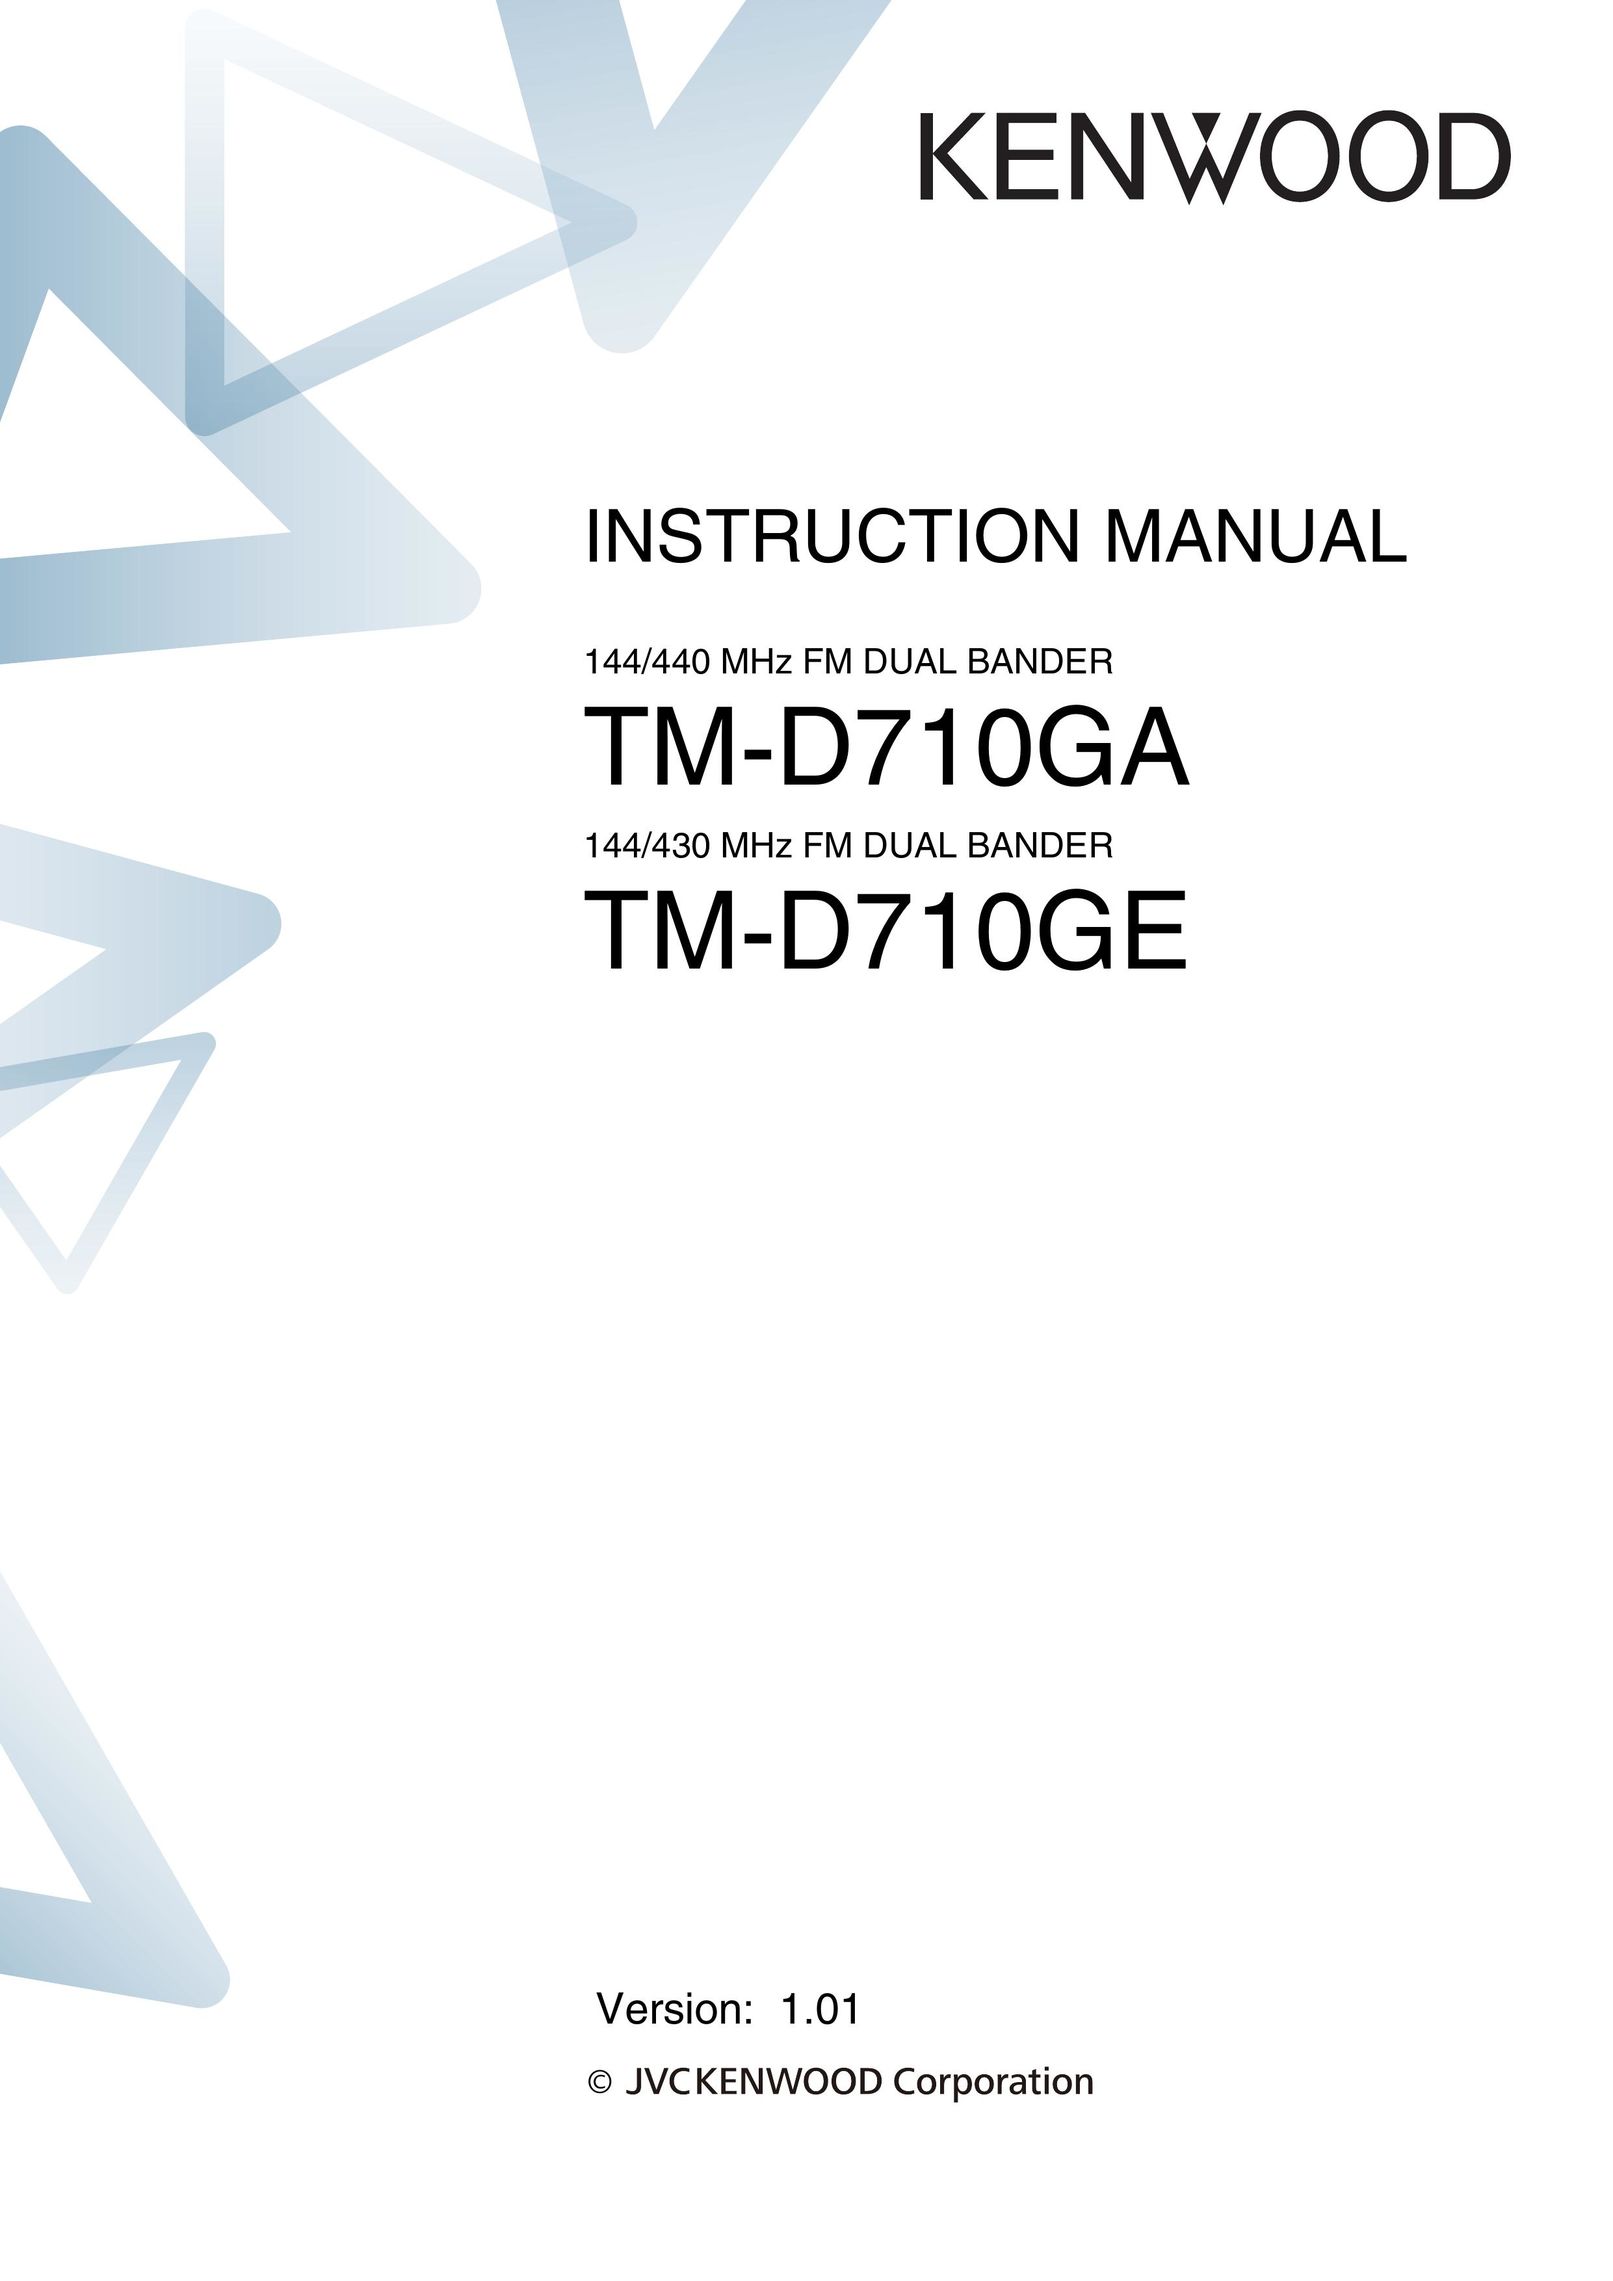 Kenwood TM-D710GE Radio User Manual